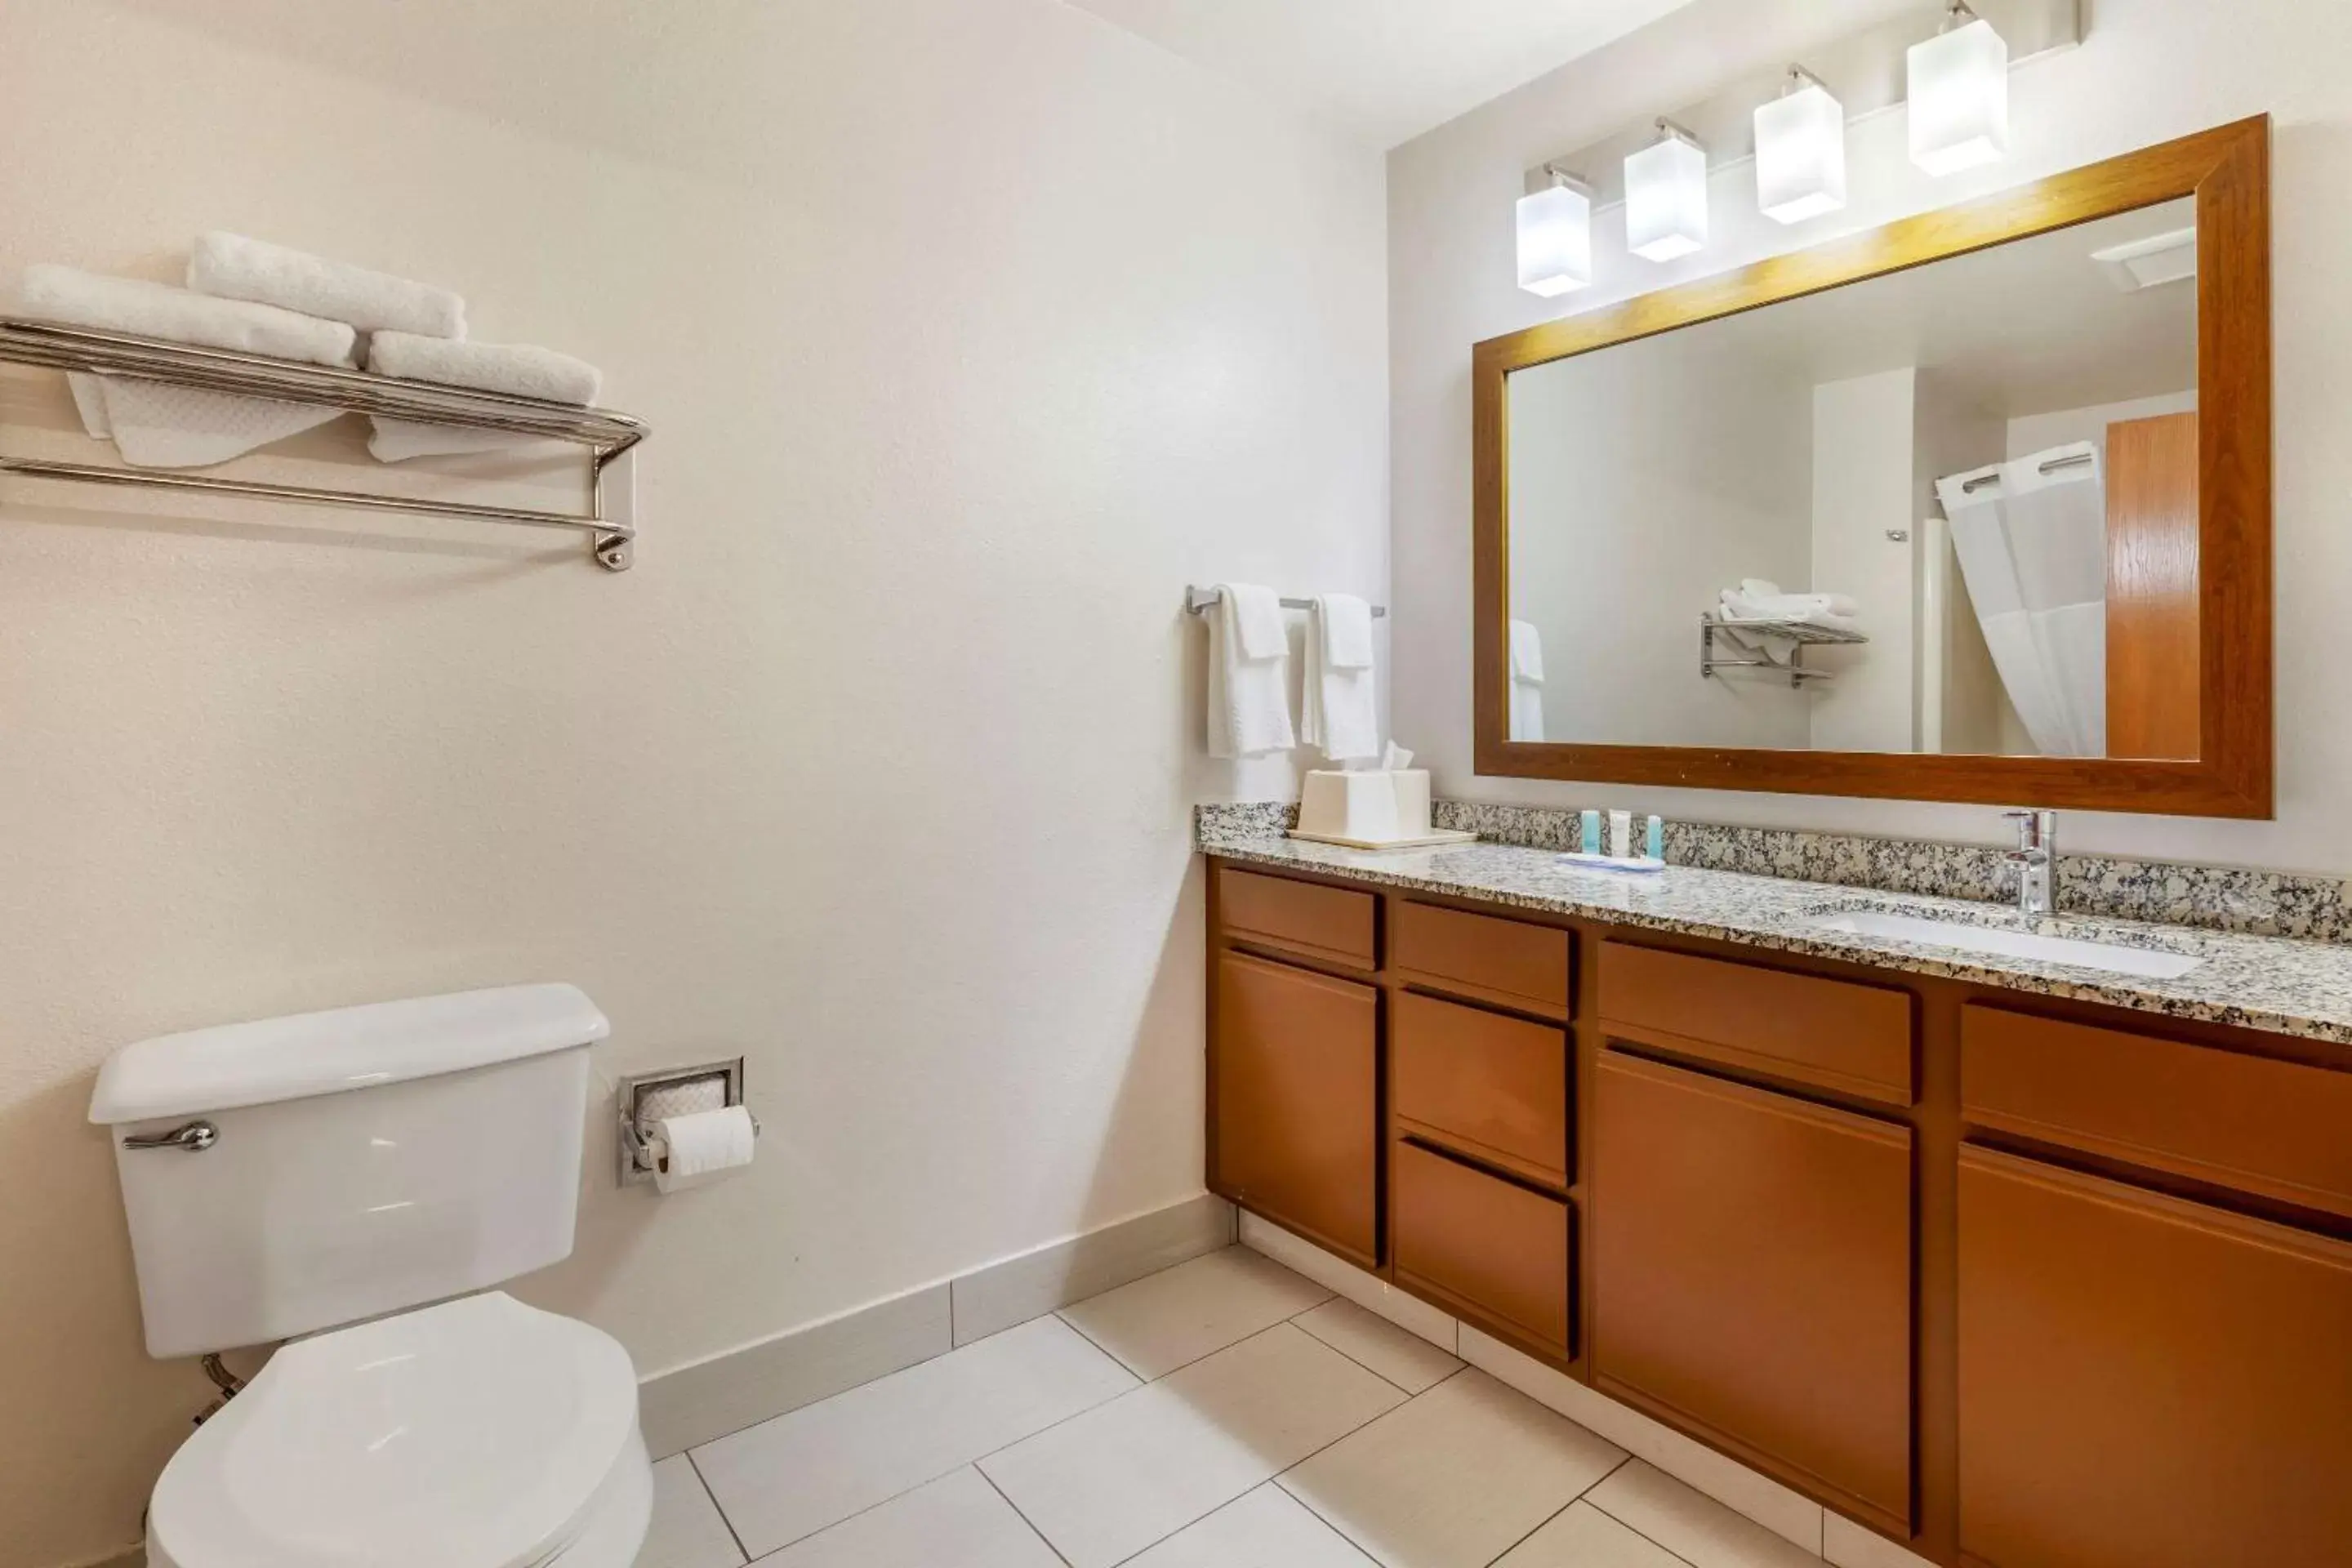 Bedroom, Bathroom in MainStay Suites Dubuque at Hwy 20